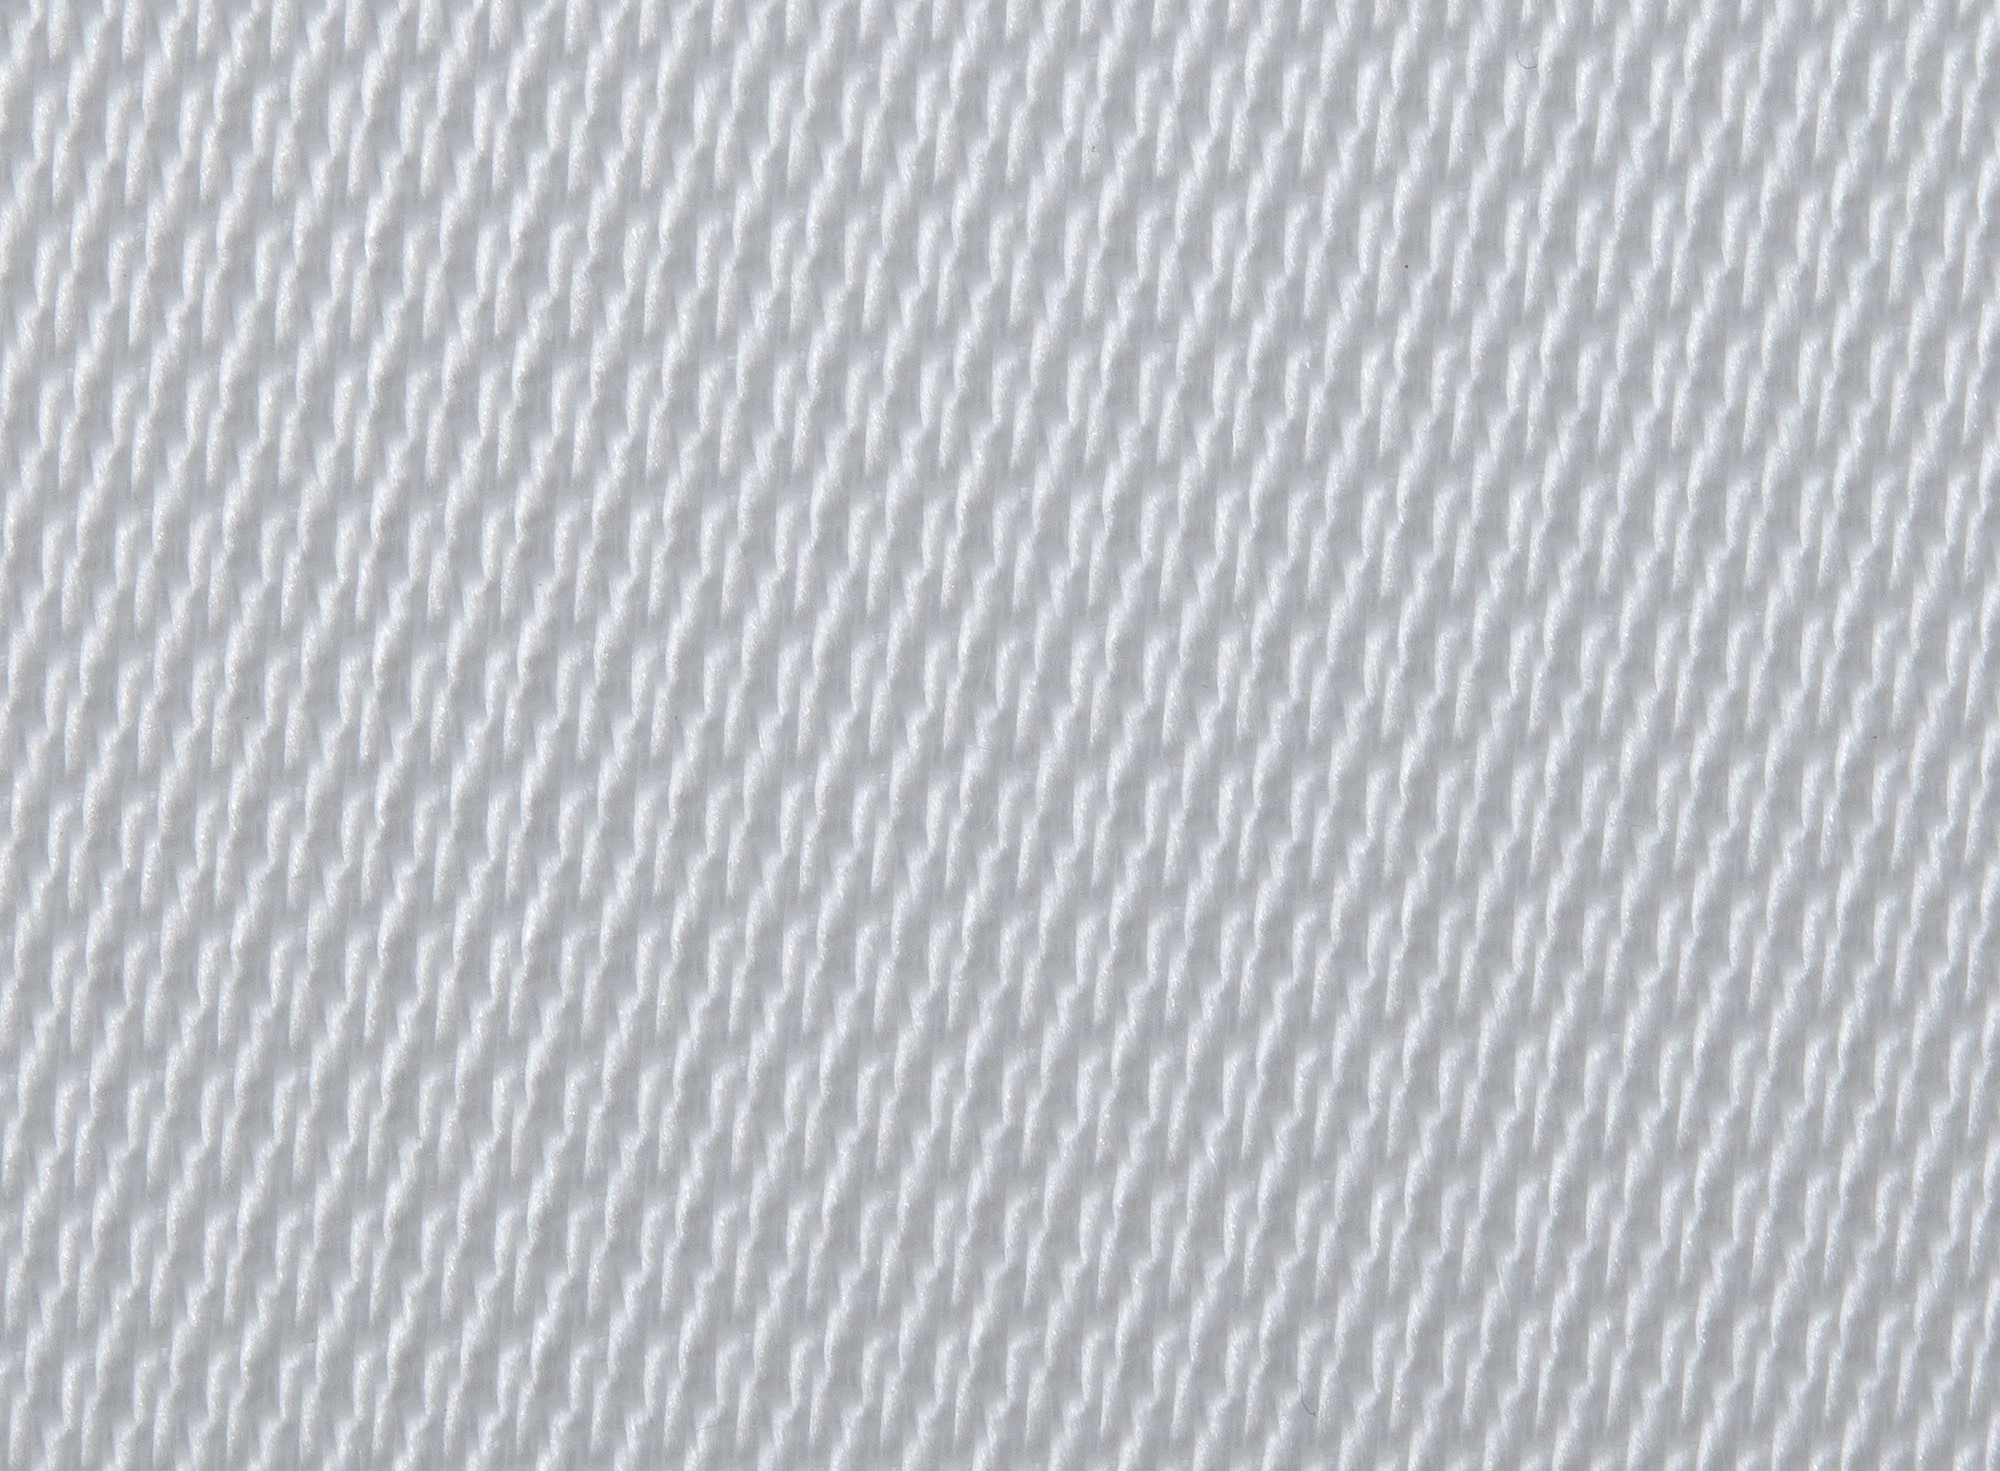 100% Pet Ht Yarn Plain 700g Industrial Filter Cloth for Vacuum Belt